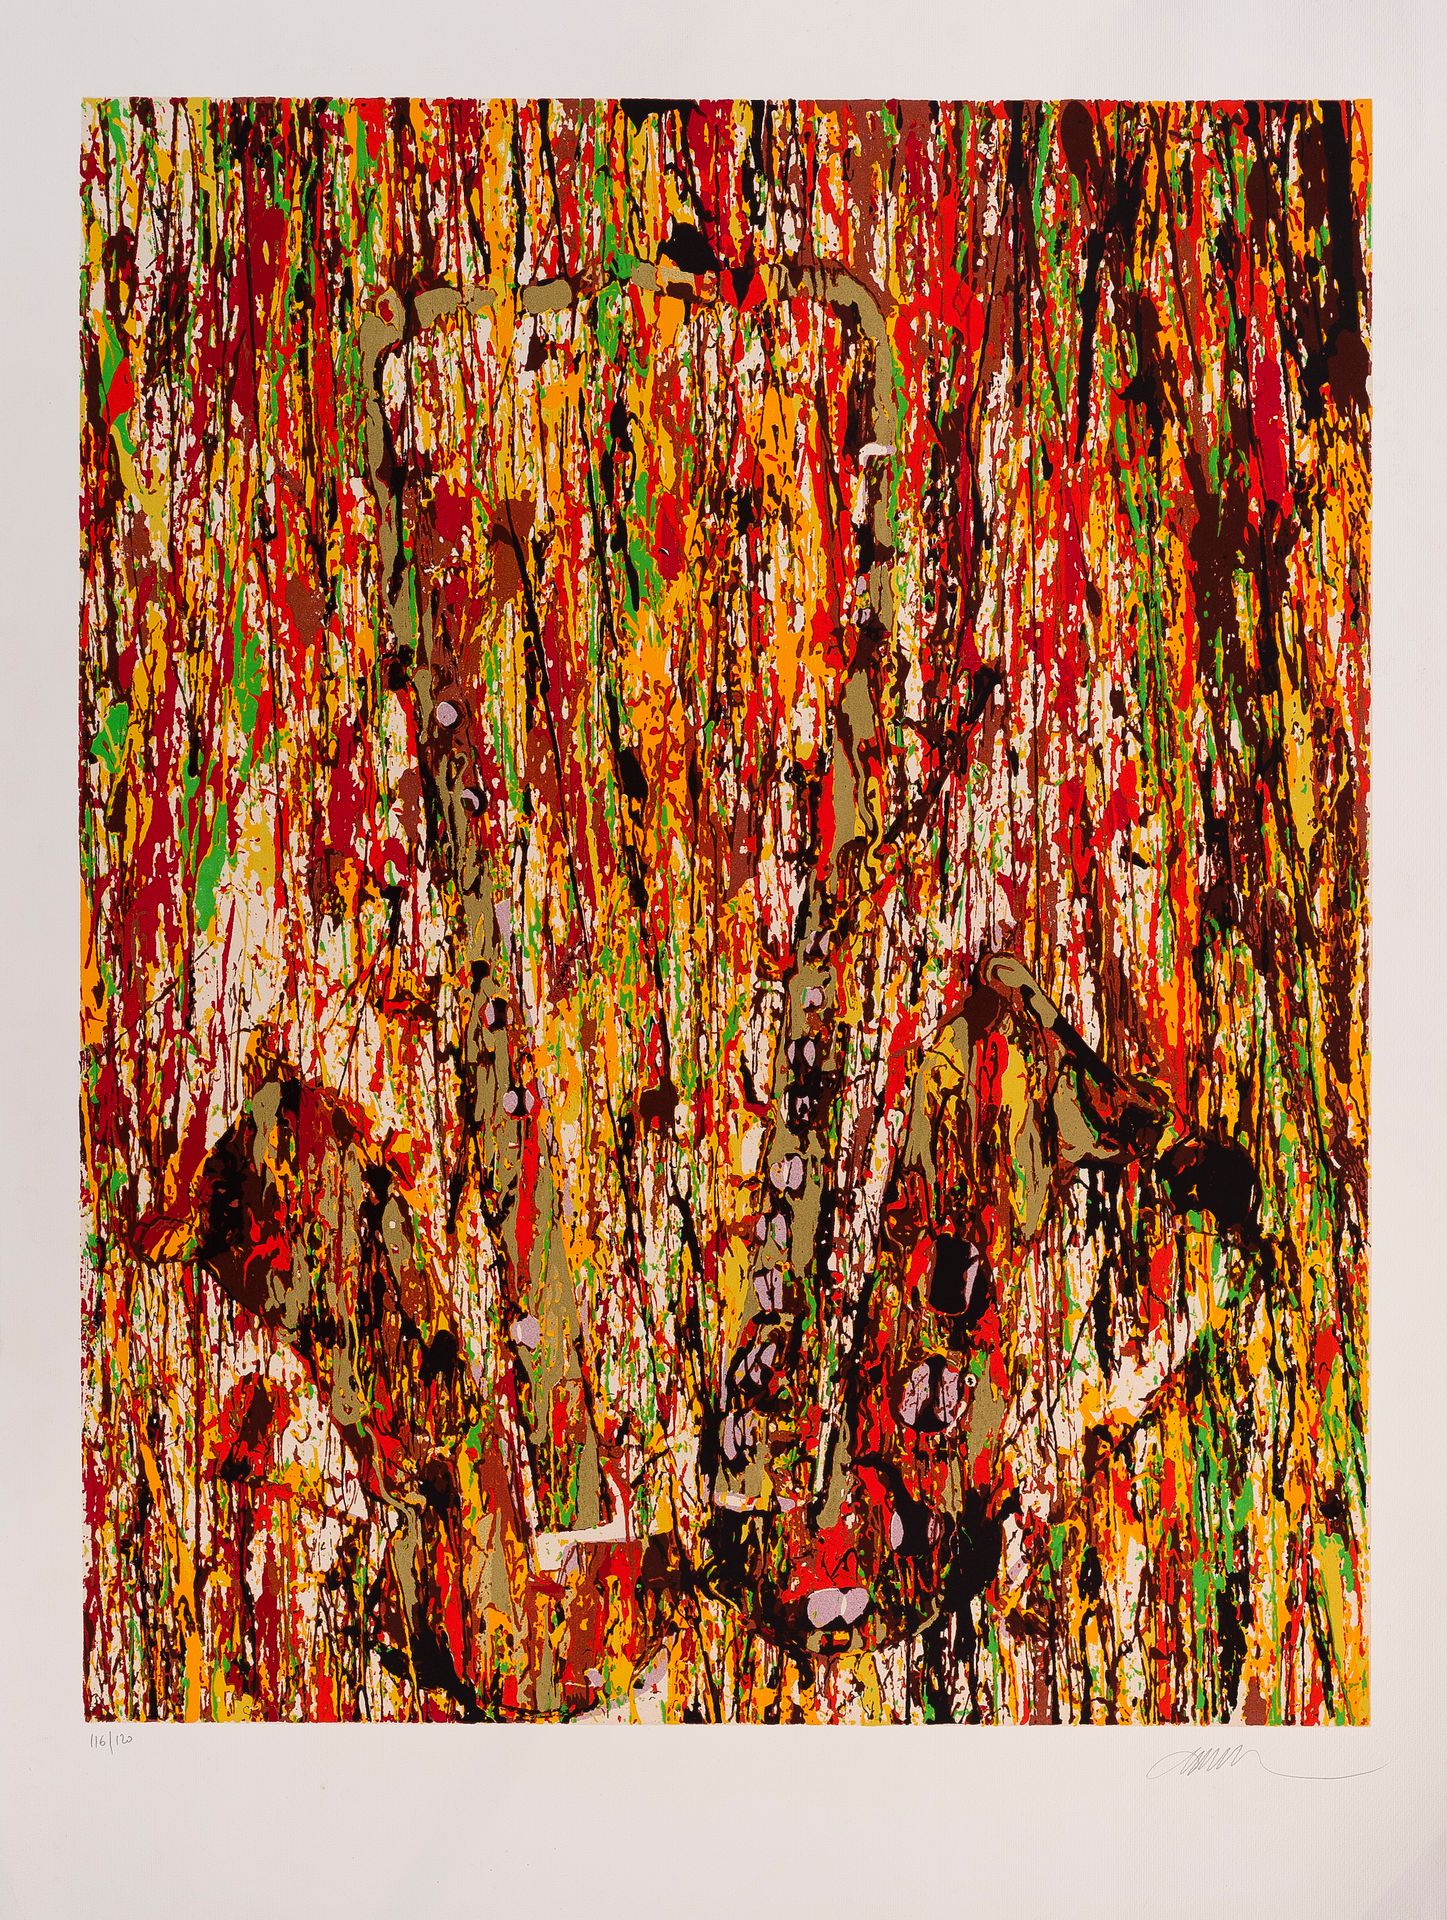 Null 阿尔曼(1928-2005)

萨克斯风和油漆流

石版画

有签名和编号的116/120

104 x 78 cm